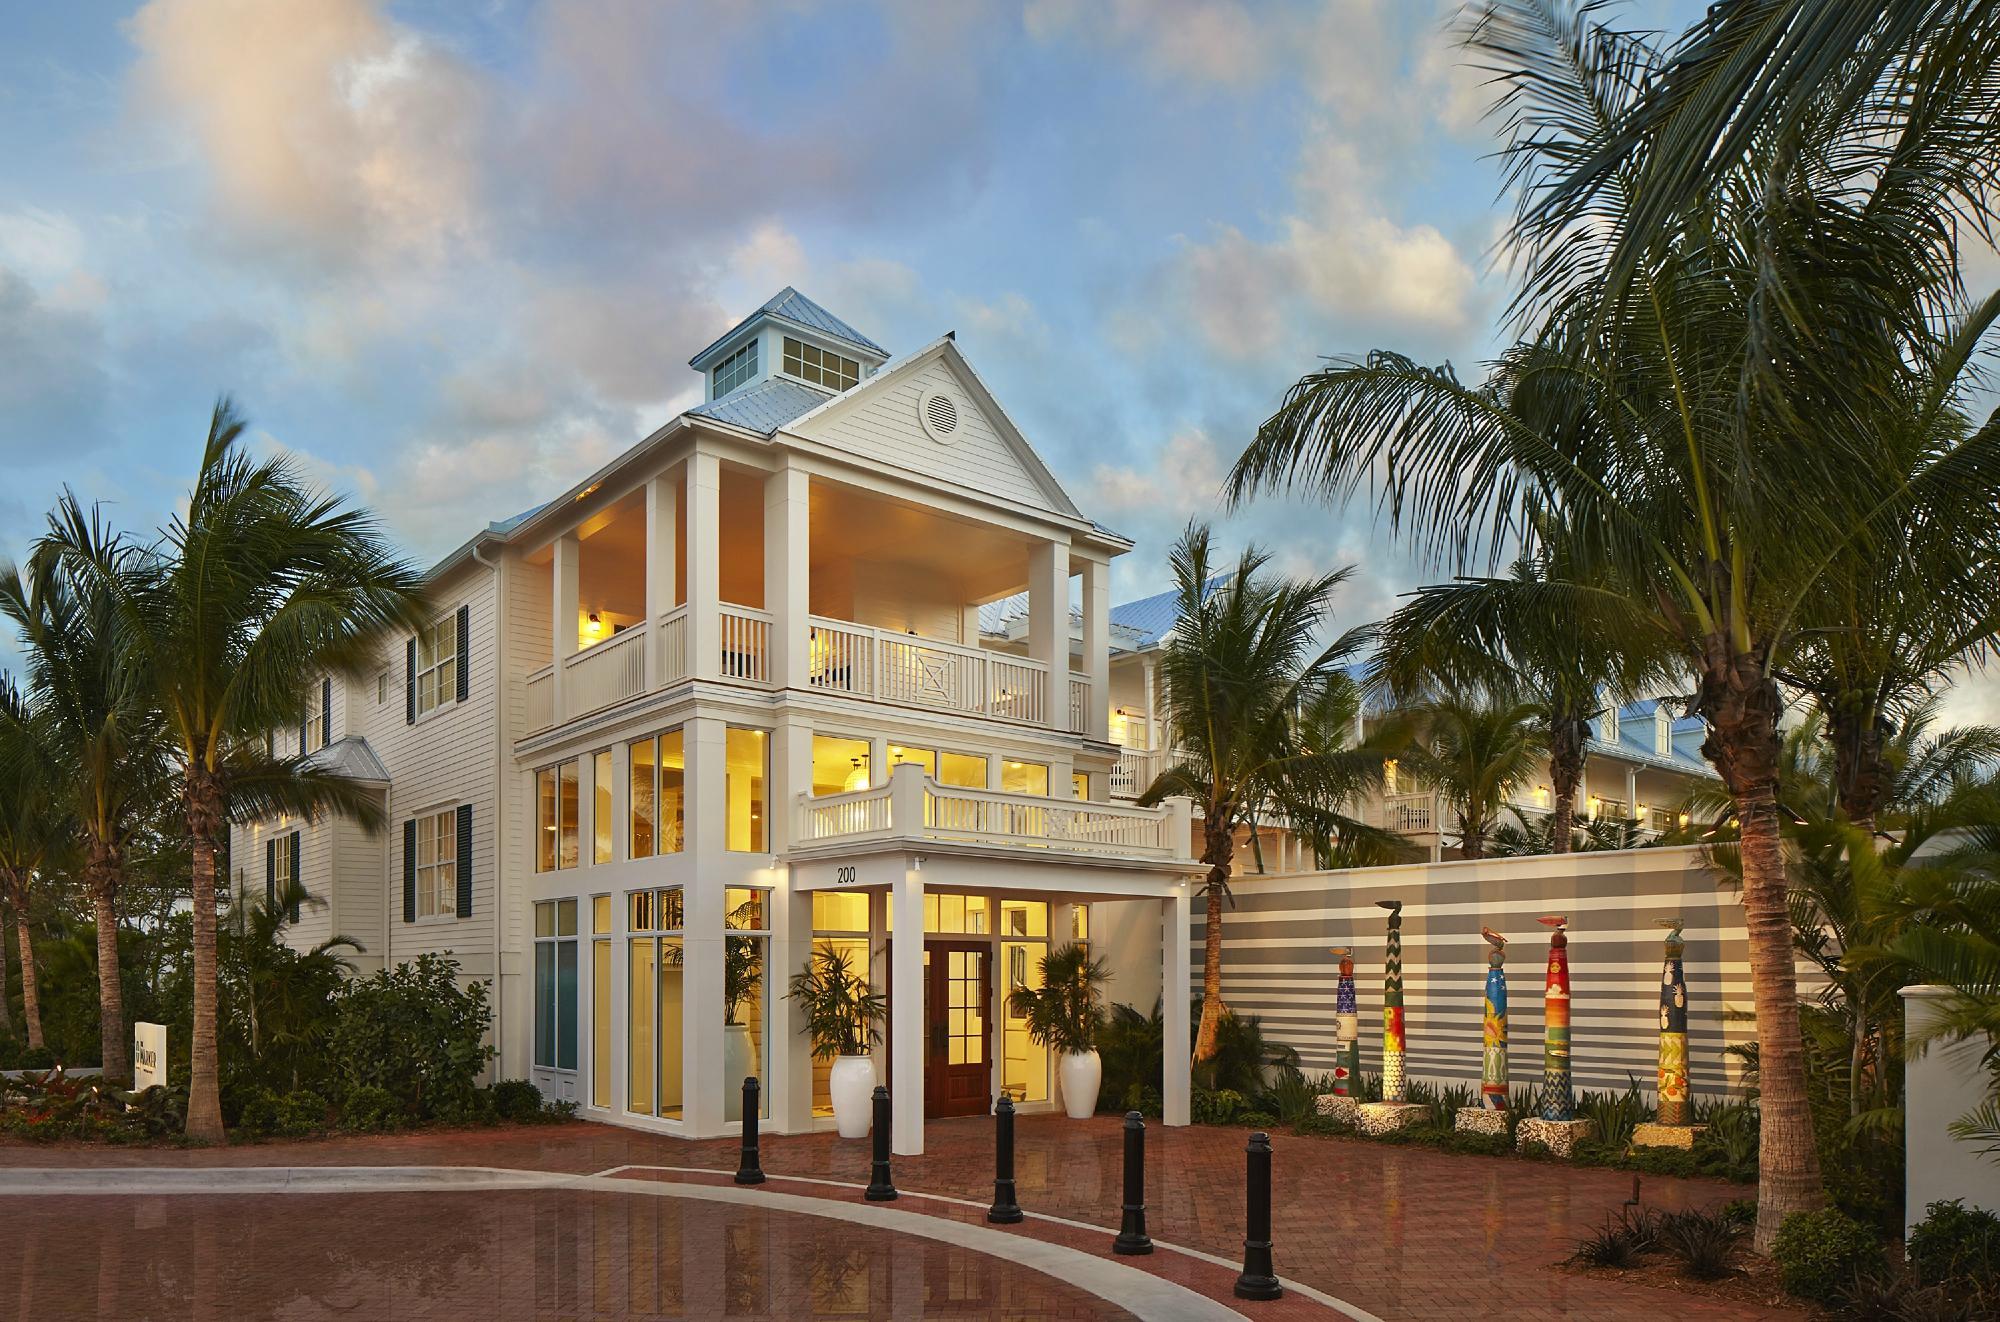 Photo of The Marker Resort Key West, Key West, FL